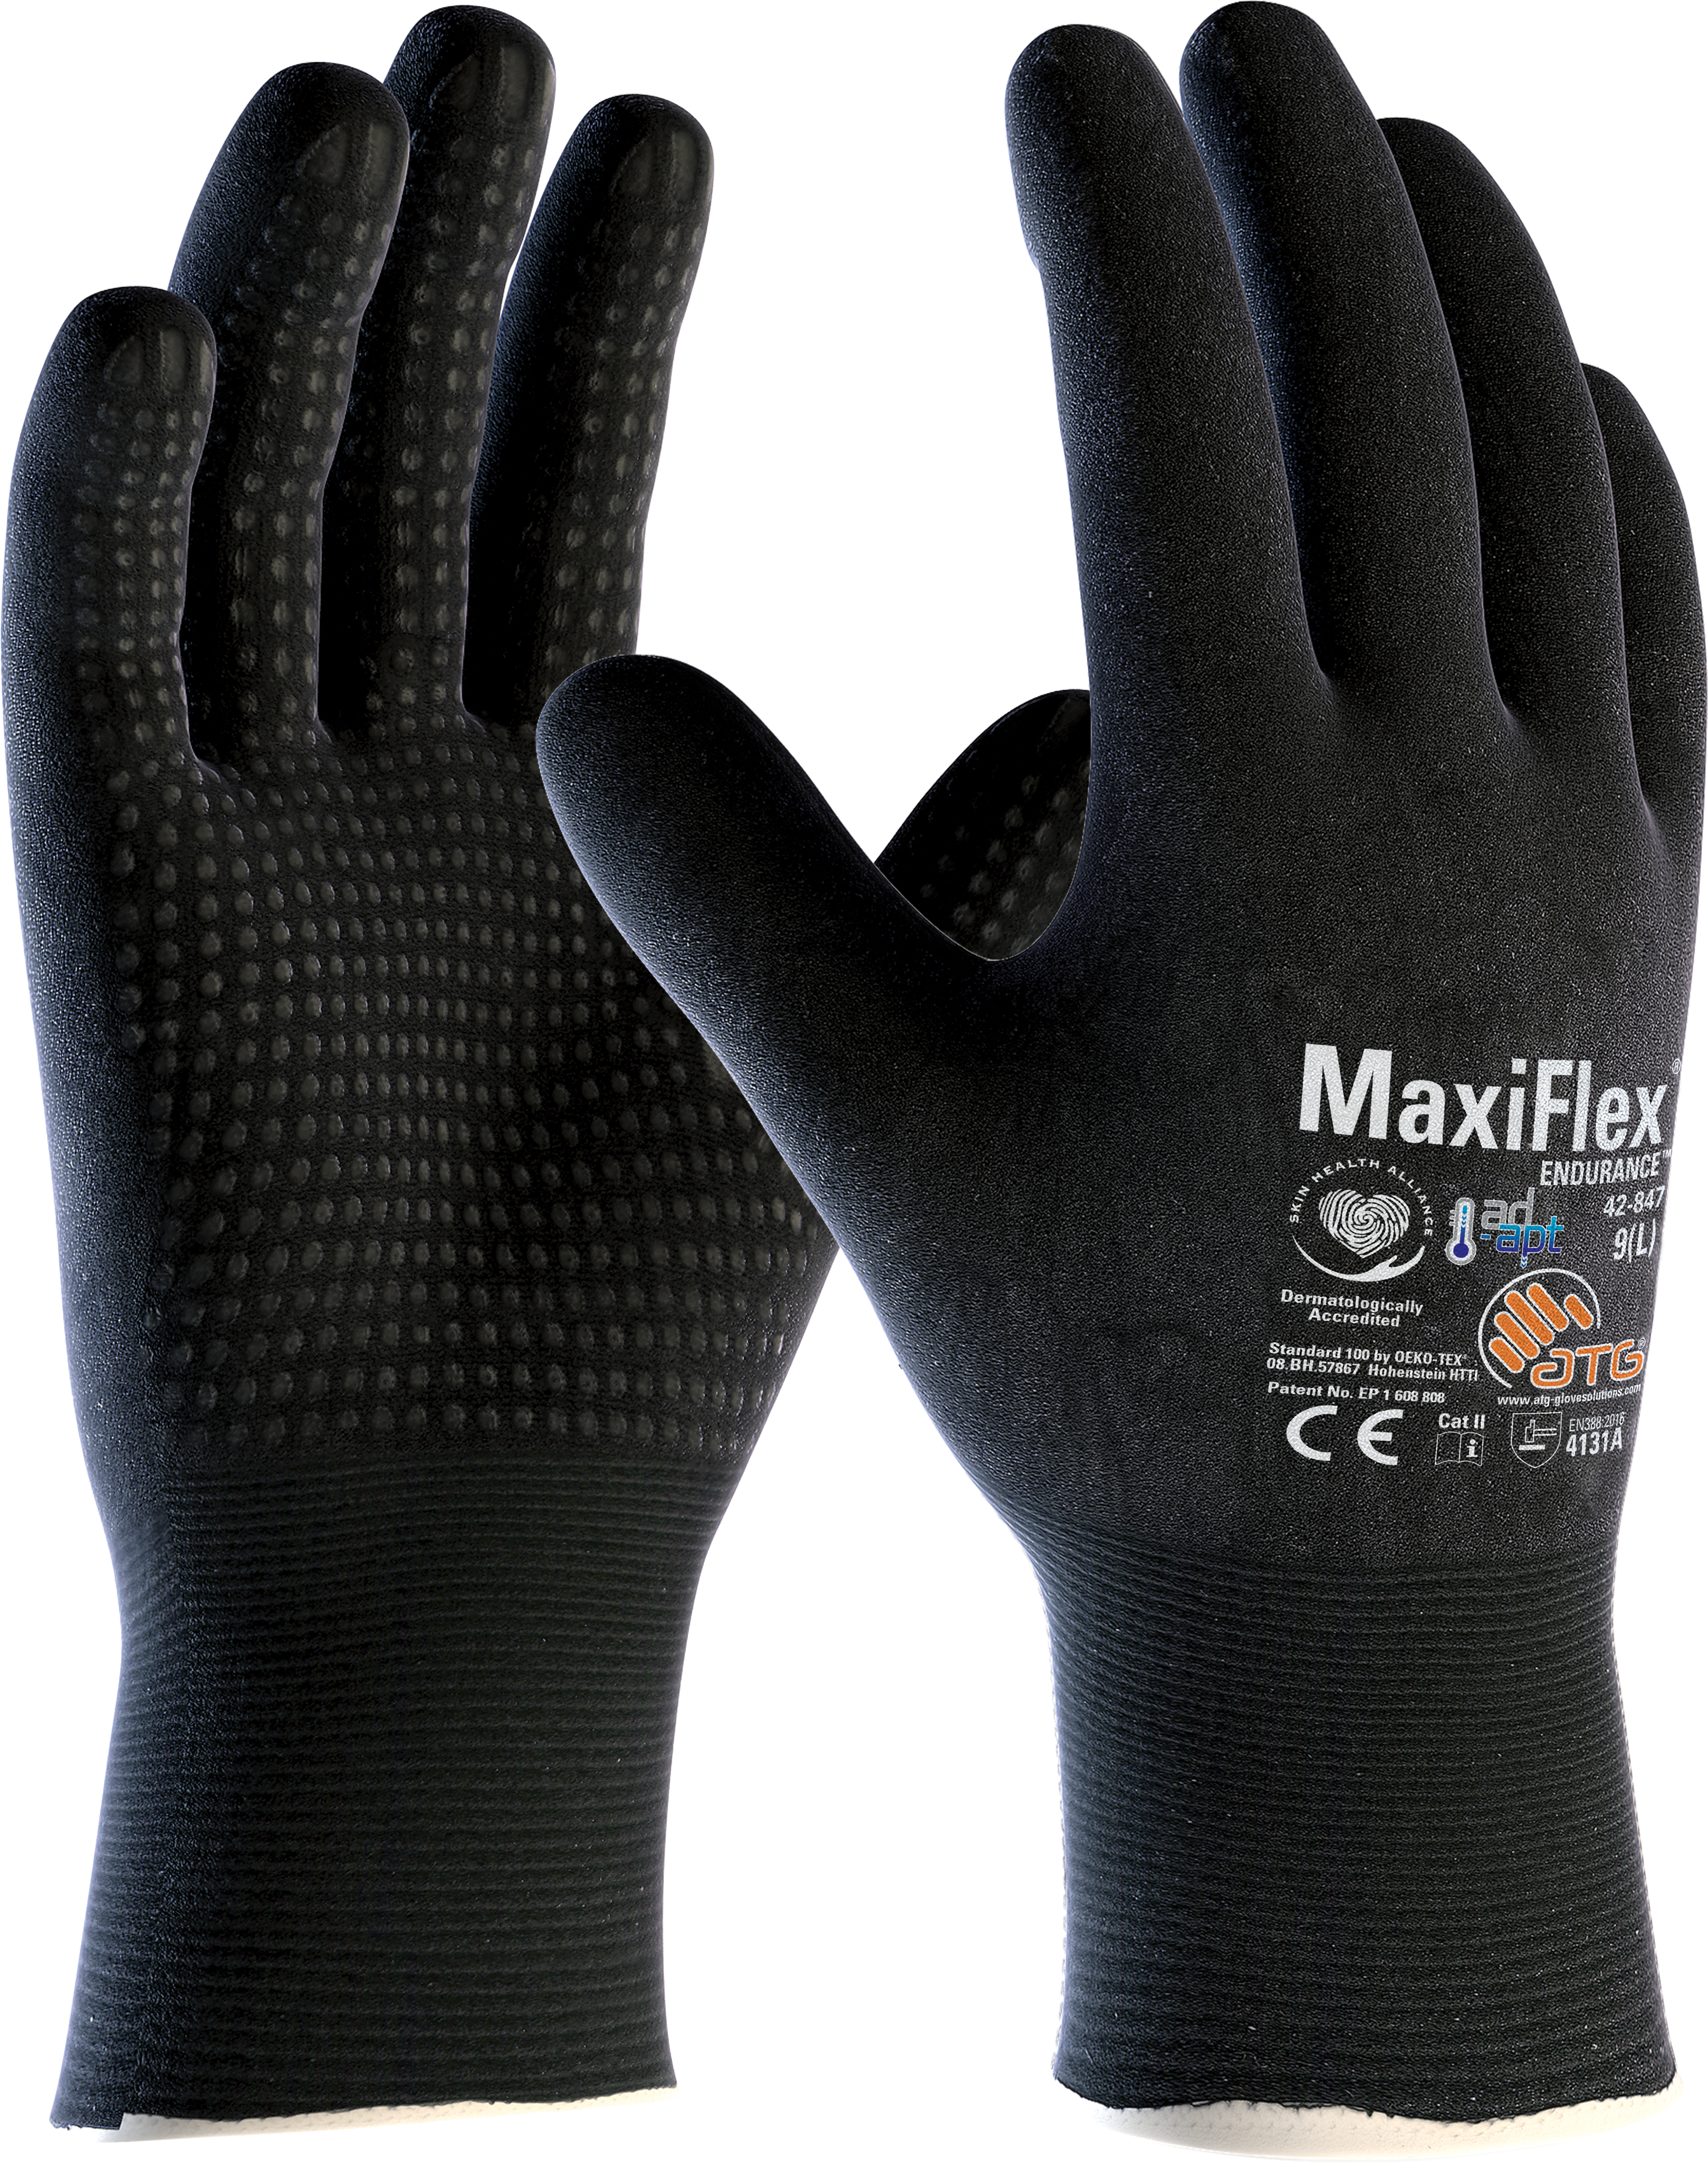 Рабочие перчатки MaxiFlex® Endurance™ Ad-apt 42-847 Фото 